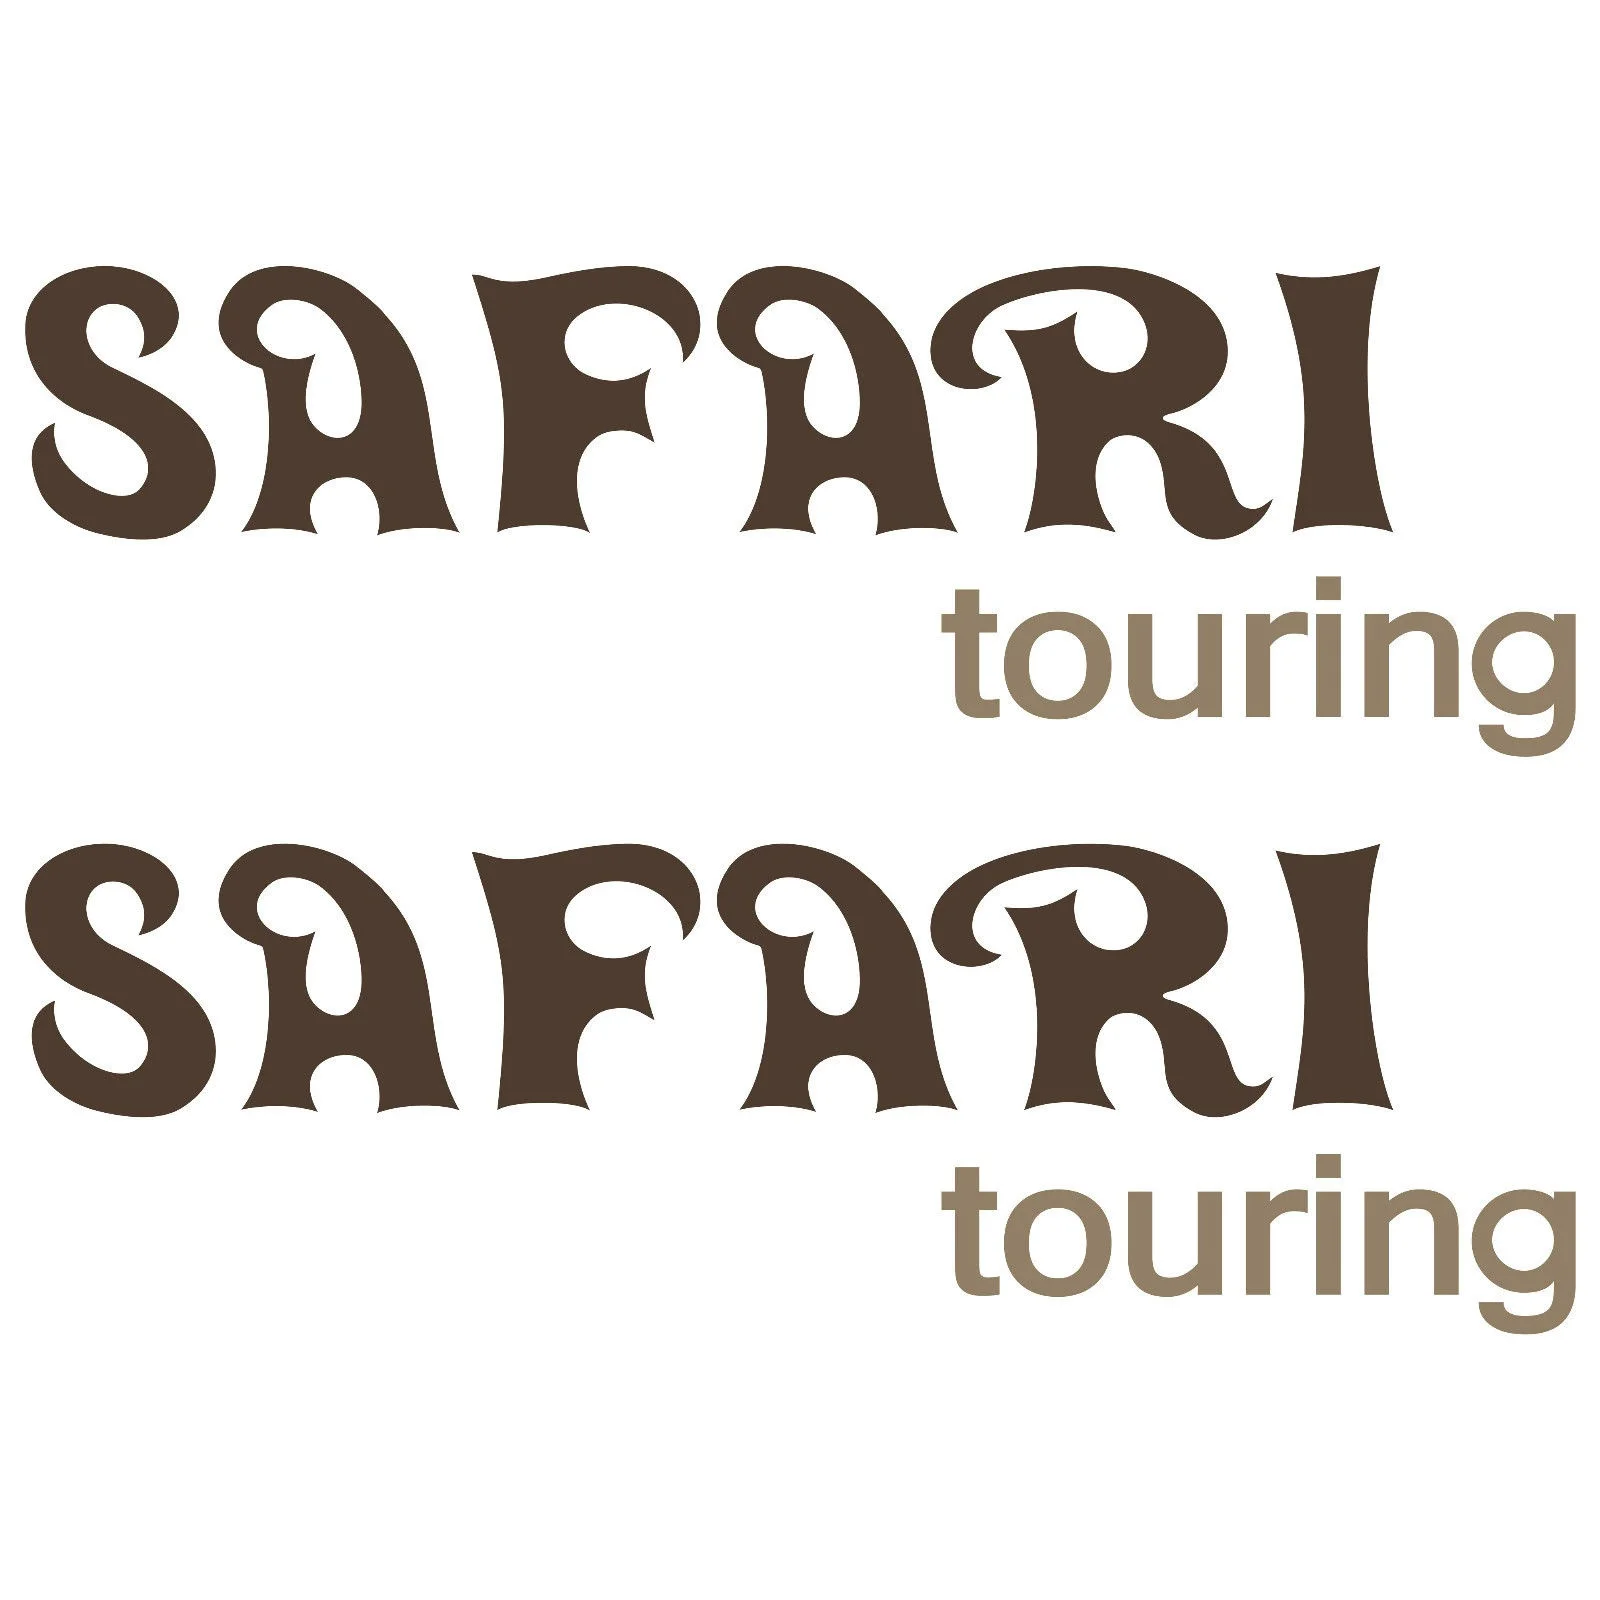 Pentru 2 x SAFARI touring ci WILK aufkleber autocolant wohnmobil camper wohnwagen caravana Auto Styling